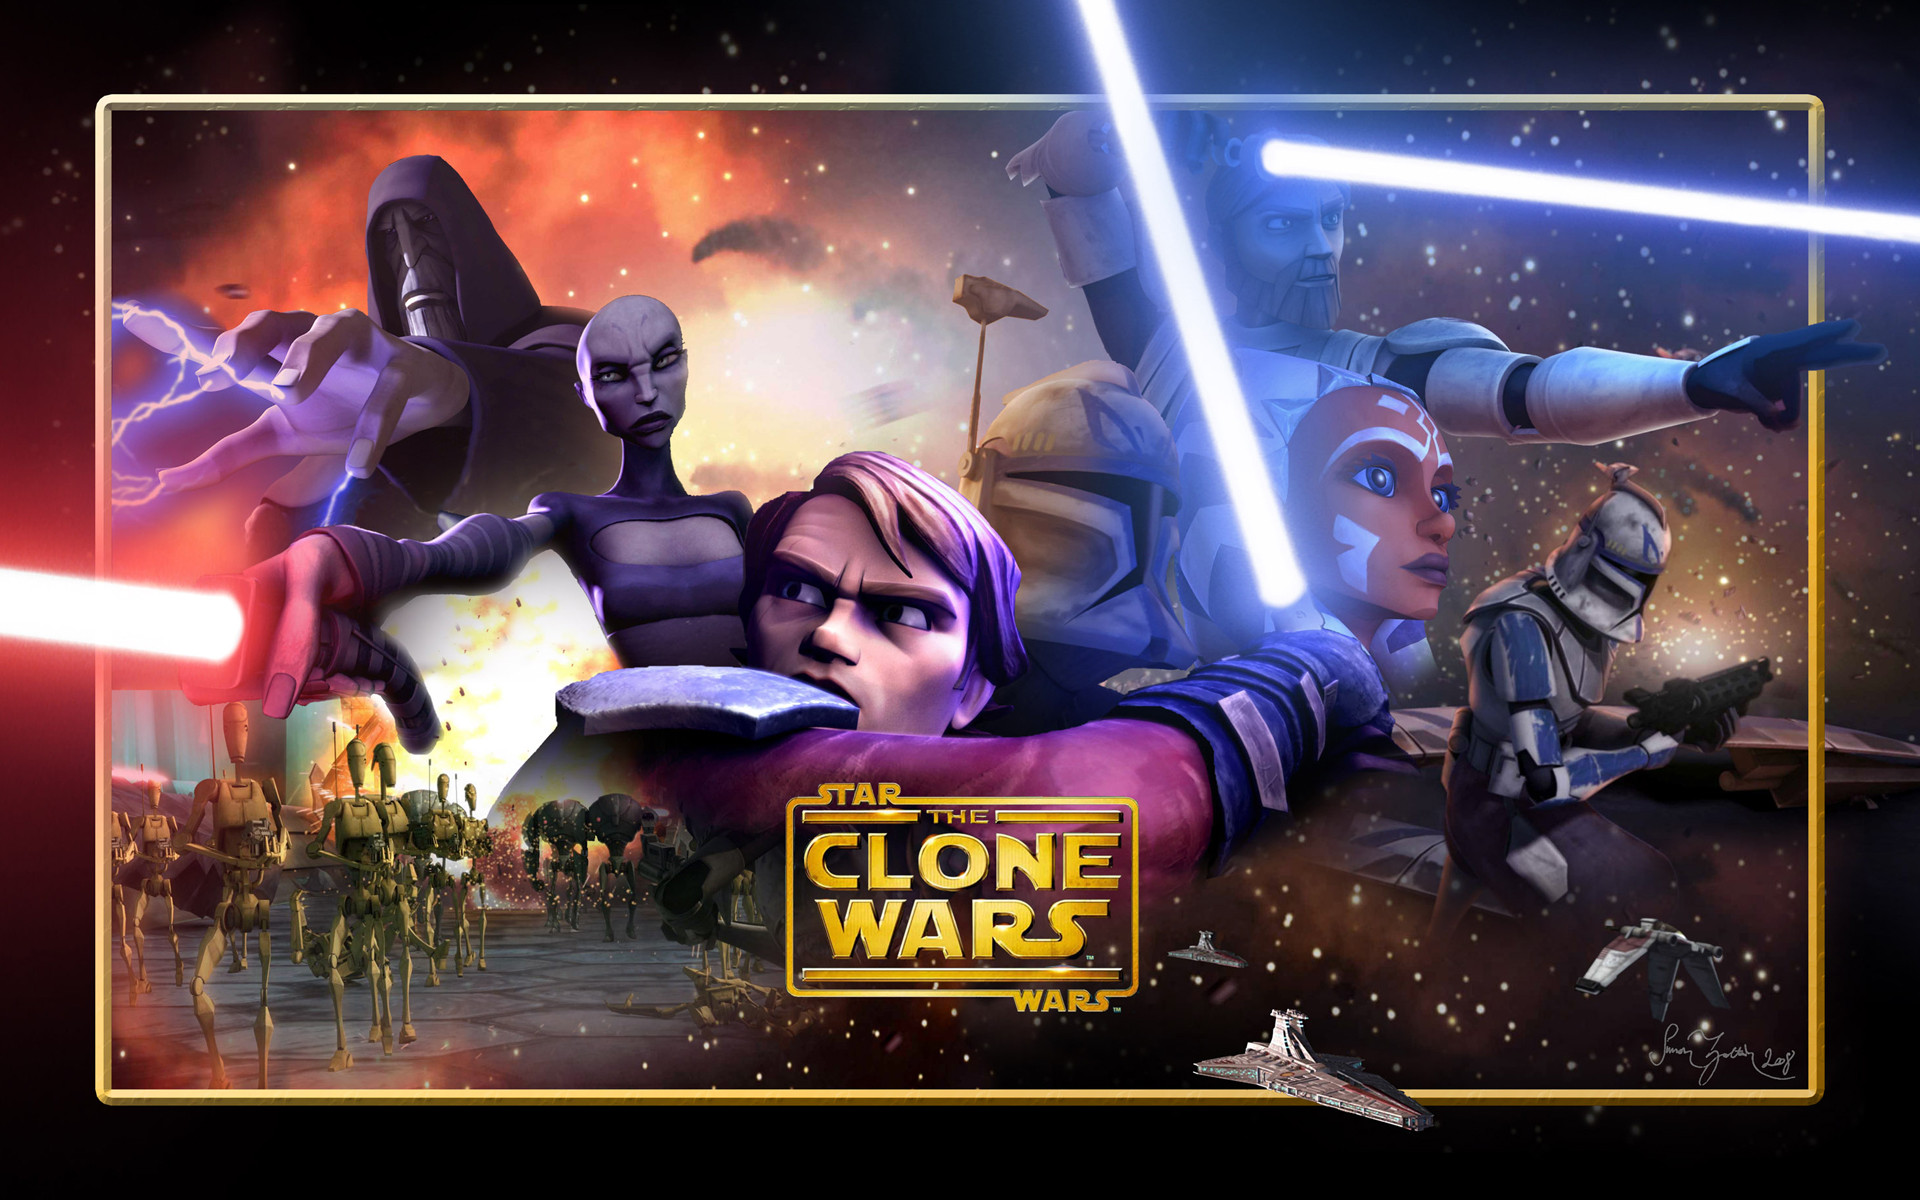 Star Wars: The Clone Wars #13